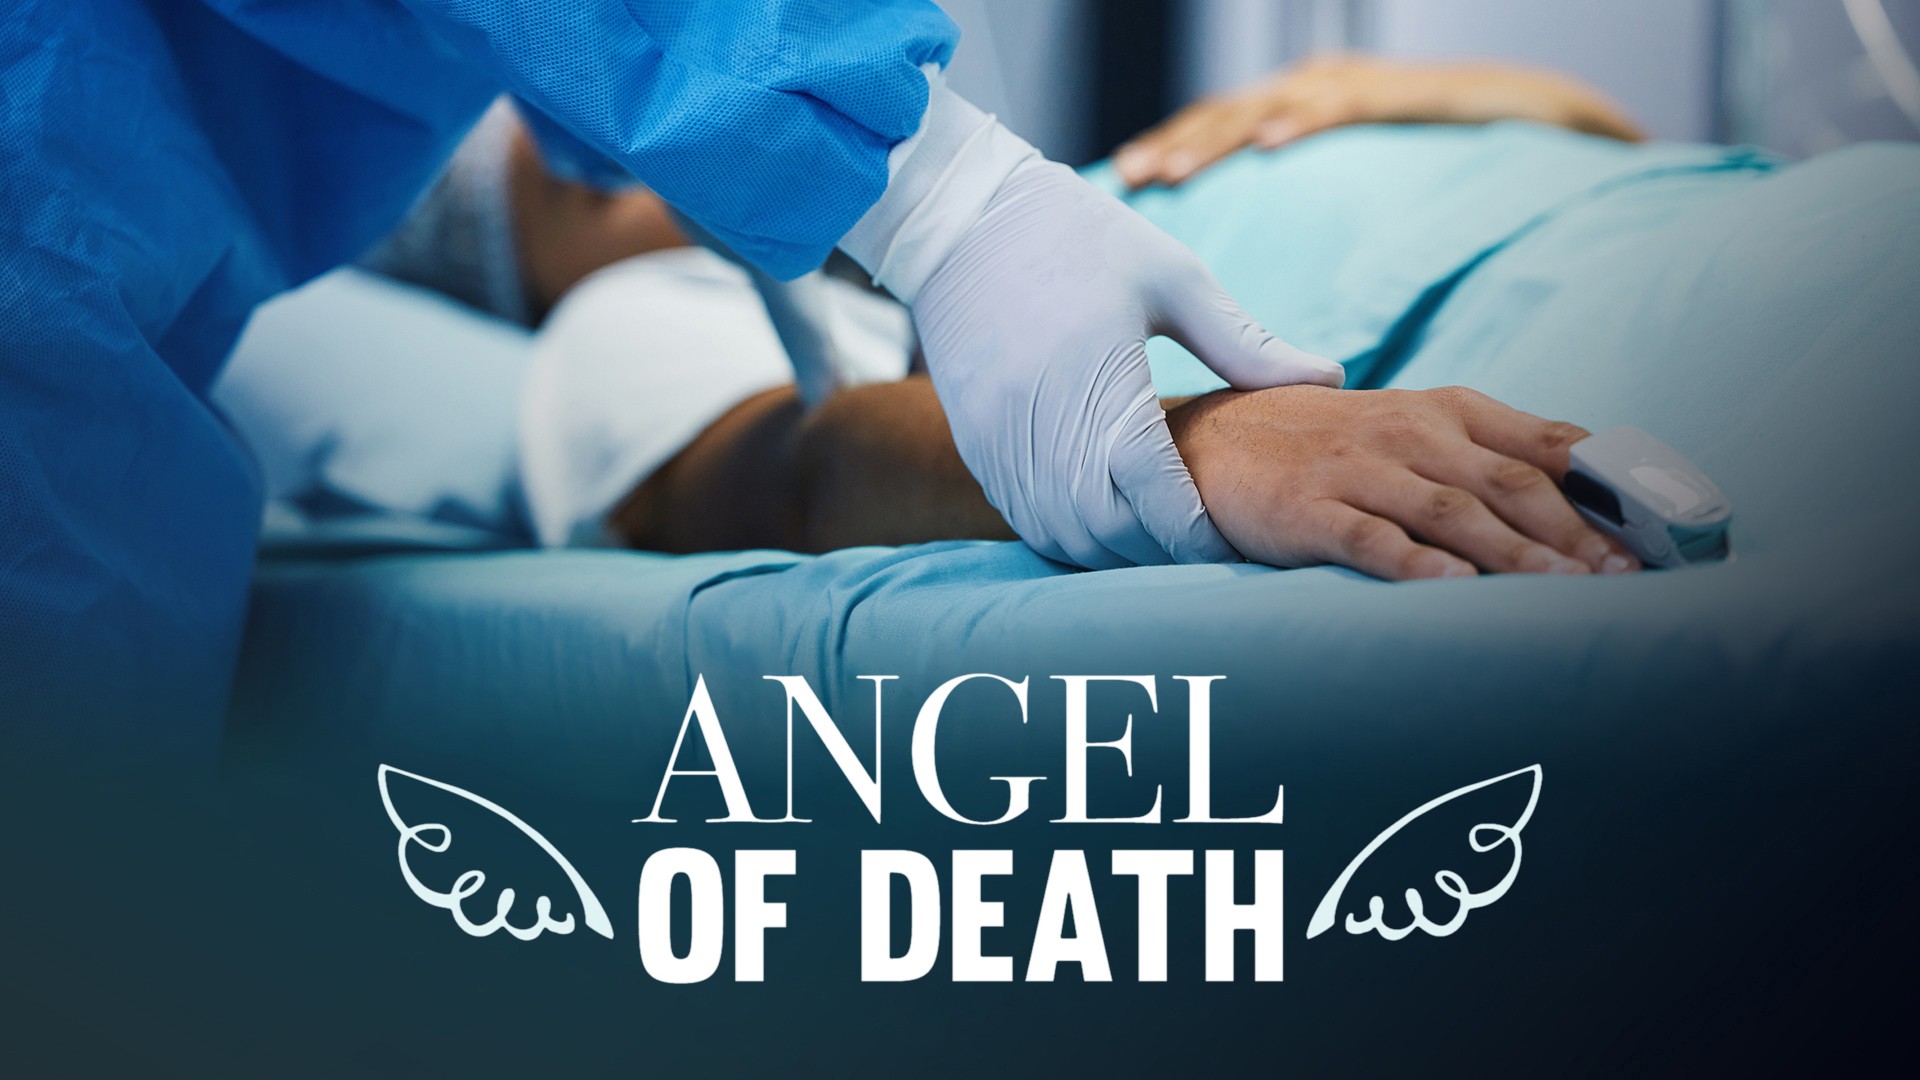 Lainz Angels of Death  Healthcare Horrors Episode 34 